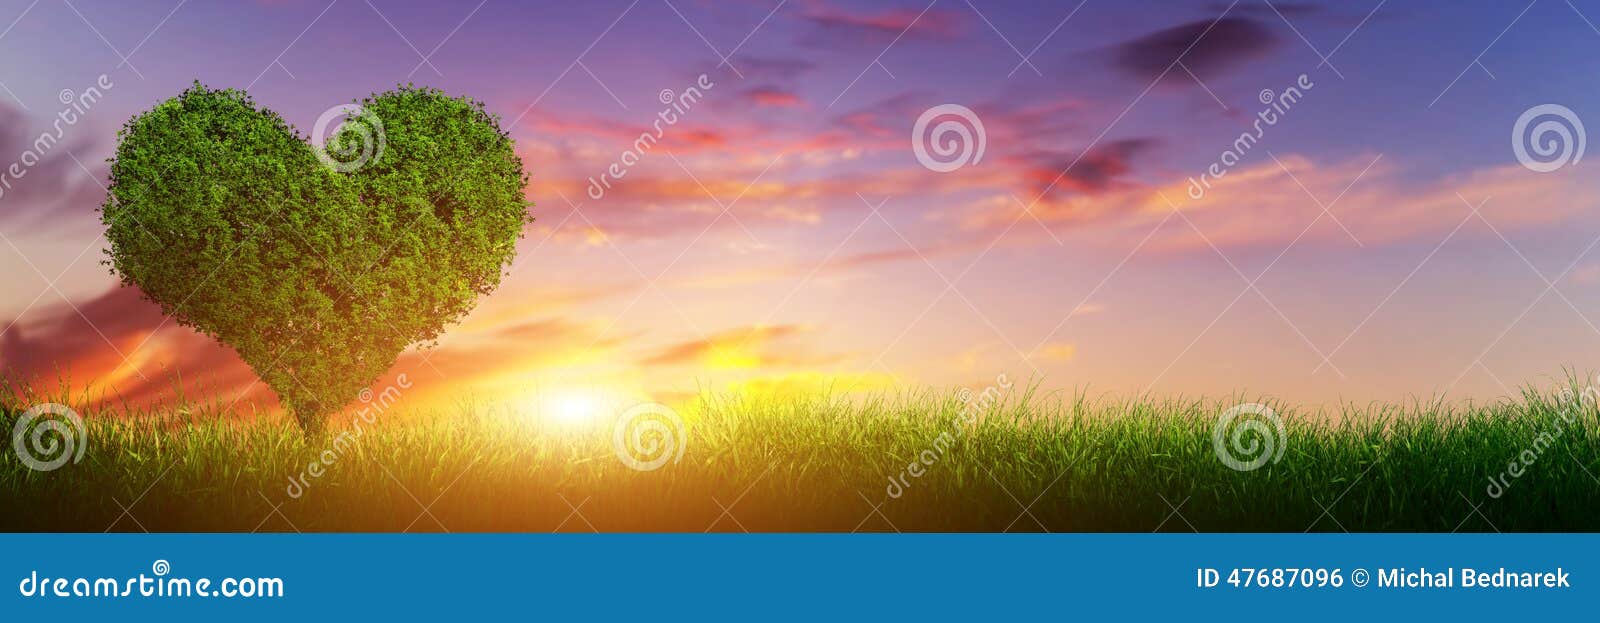 heart  tree on grass at sunset. love, panorama